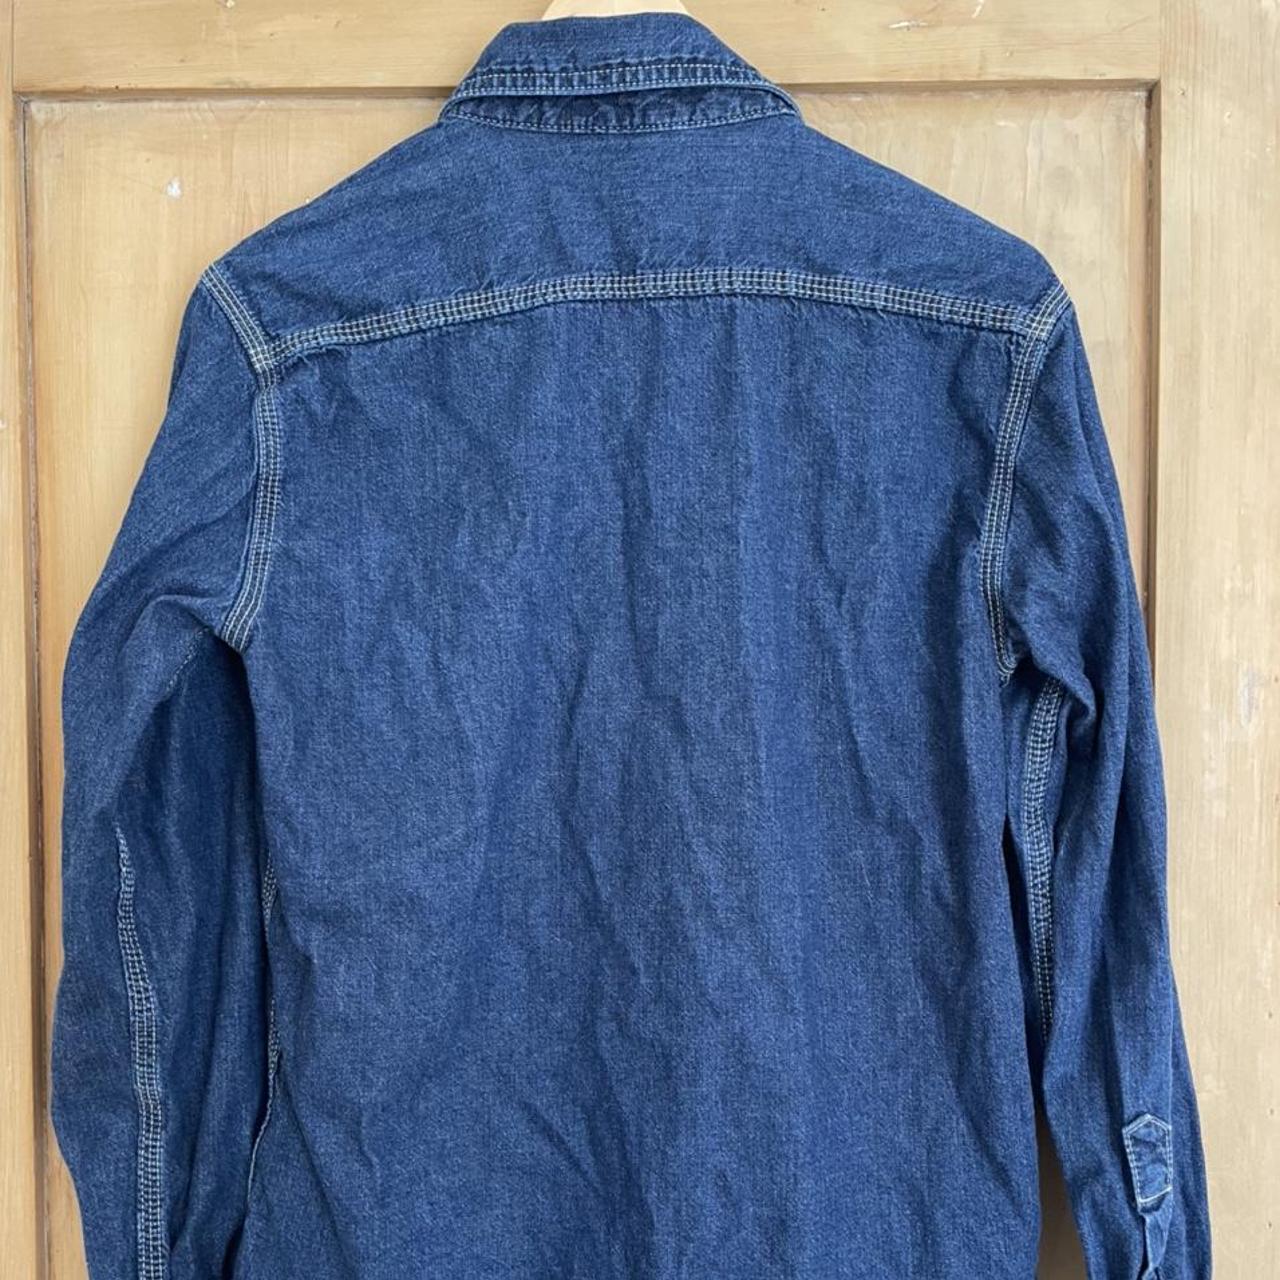 Uniqlo denim work shirt in blue wash, sized XS. Used... - Depop